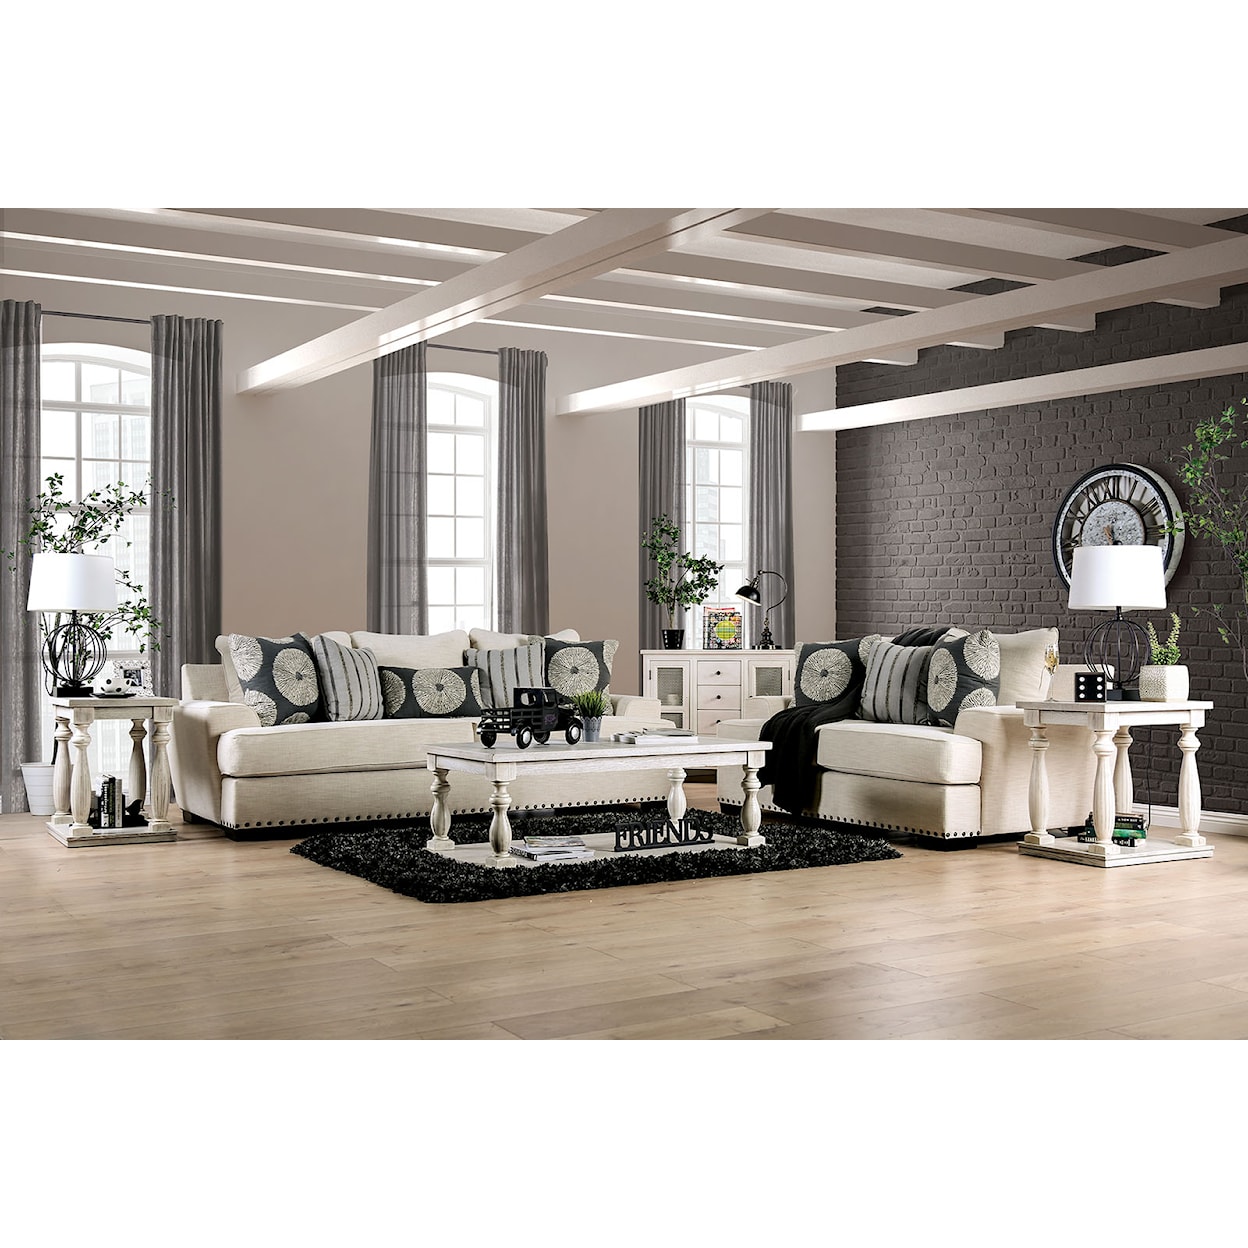 Furniture of America Germaine Sofa and Loveseat Set